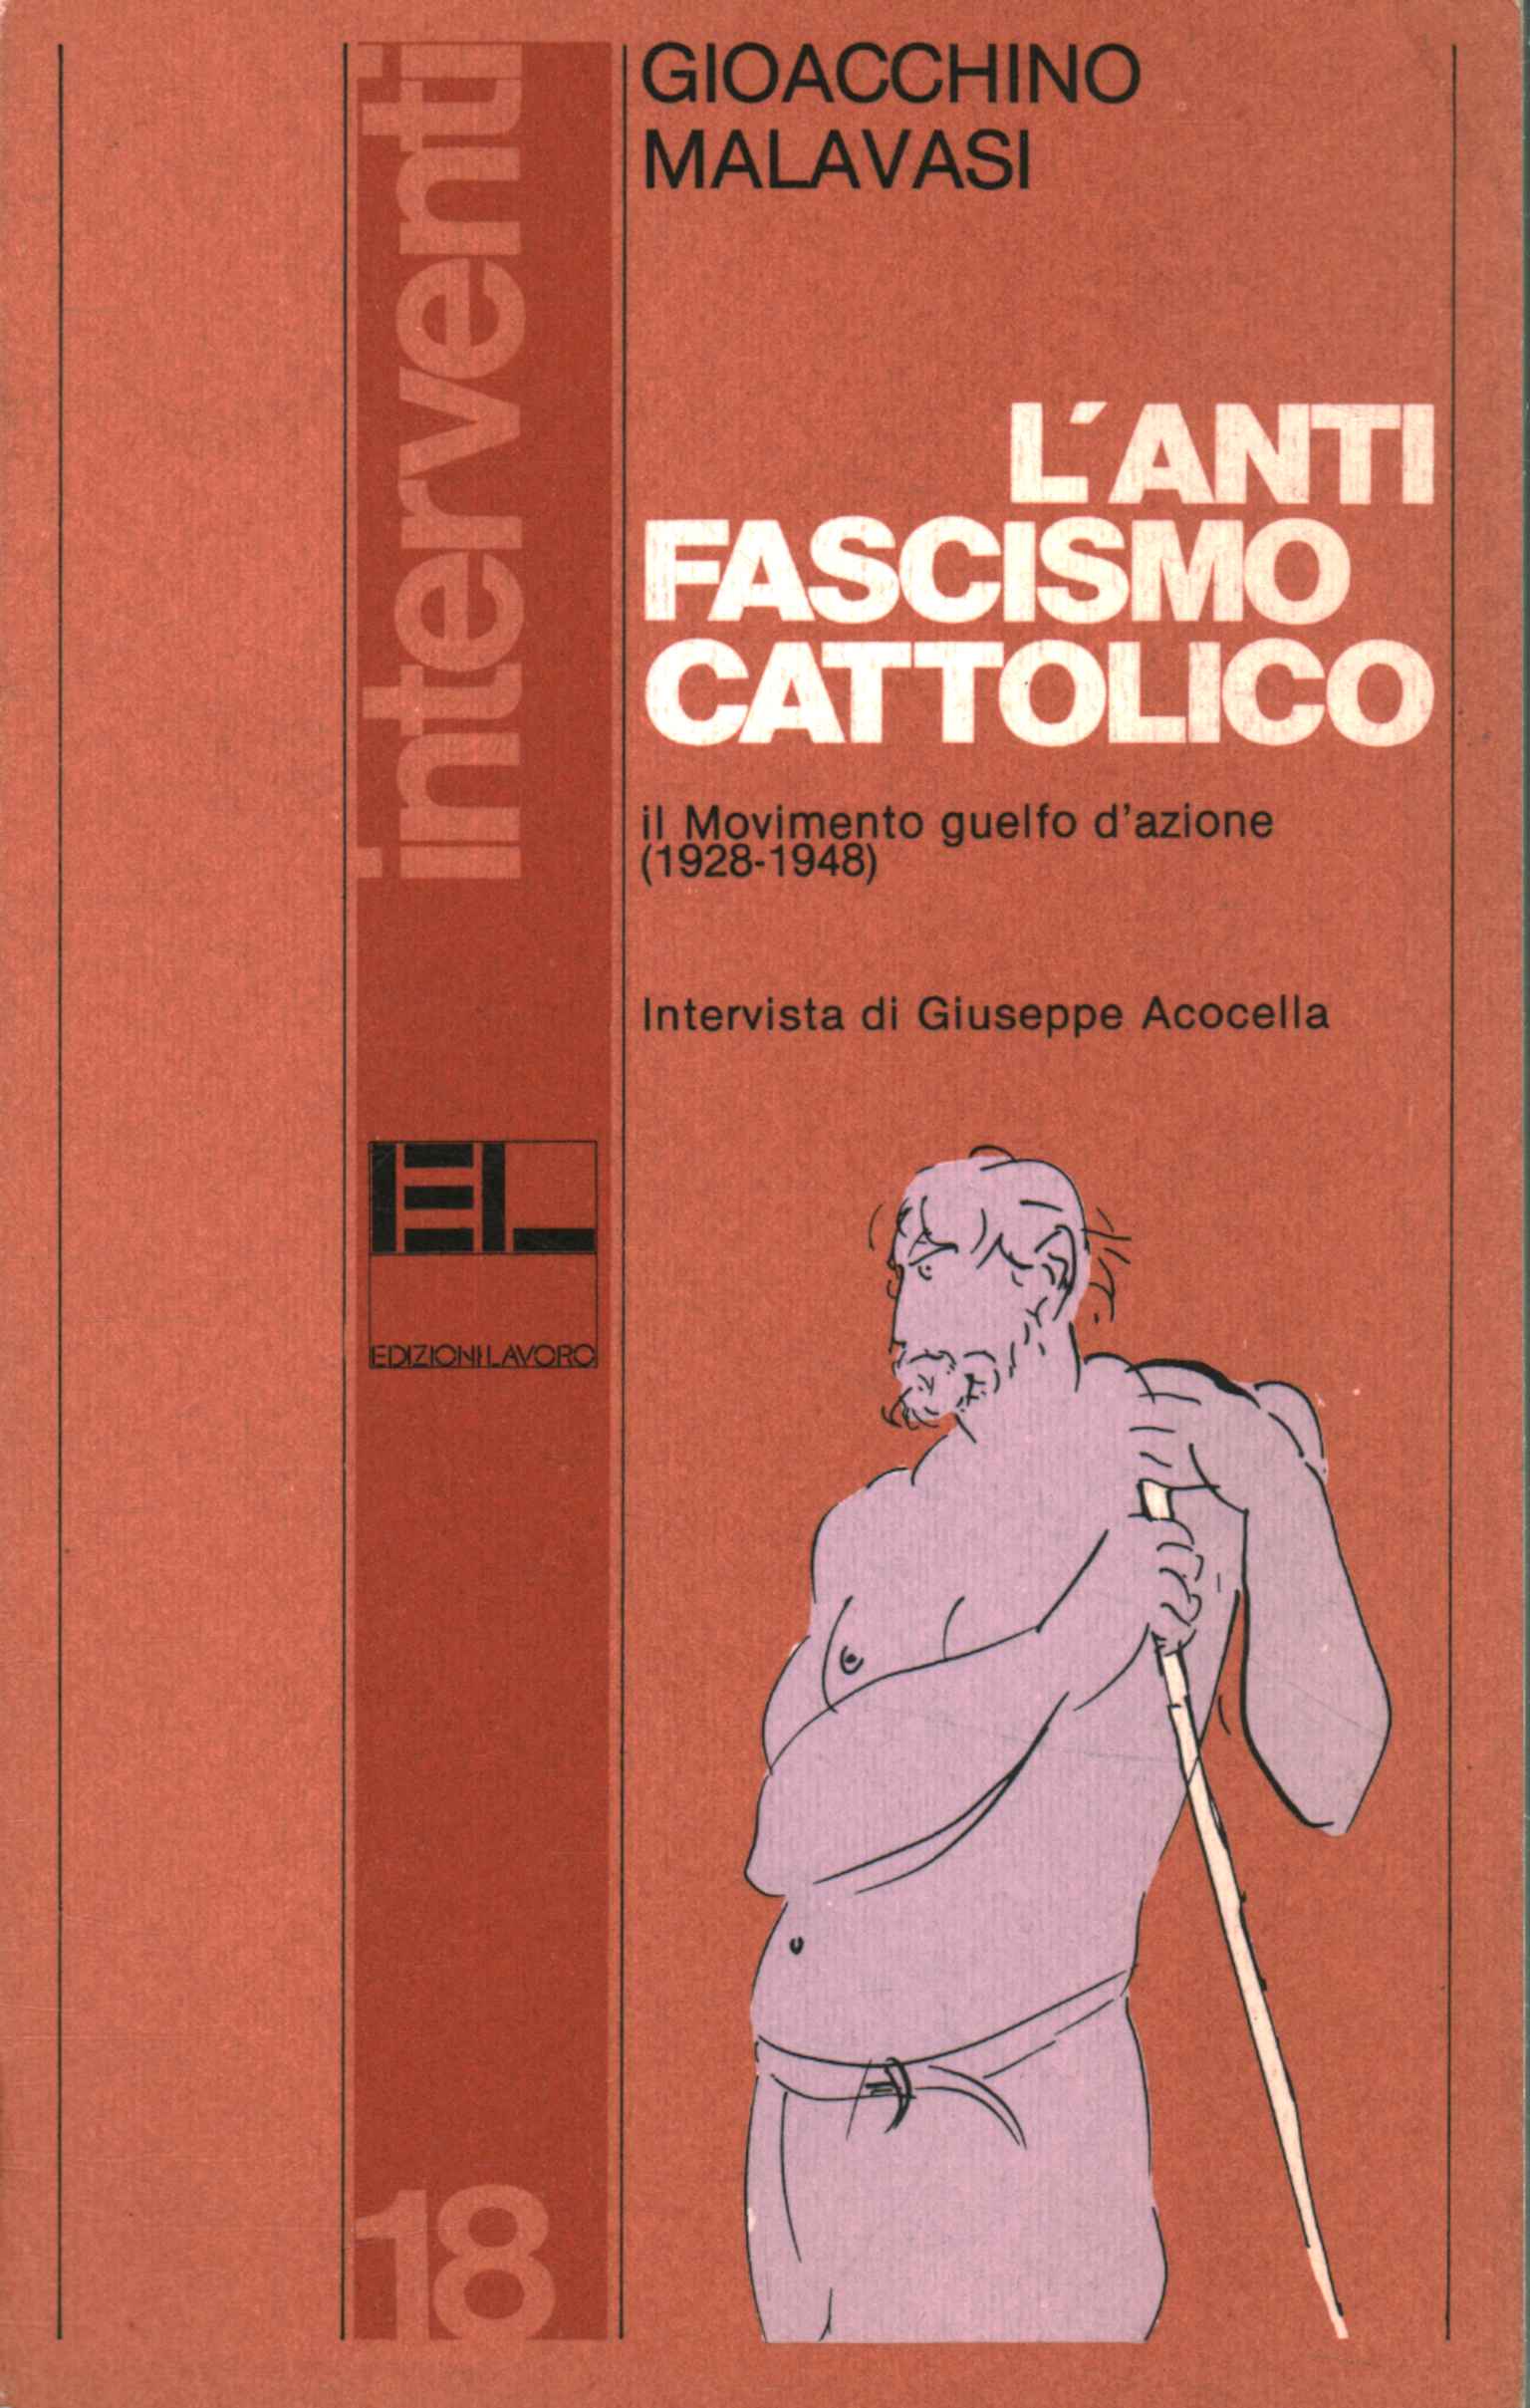 Catholic anti-fascism